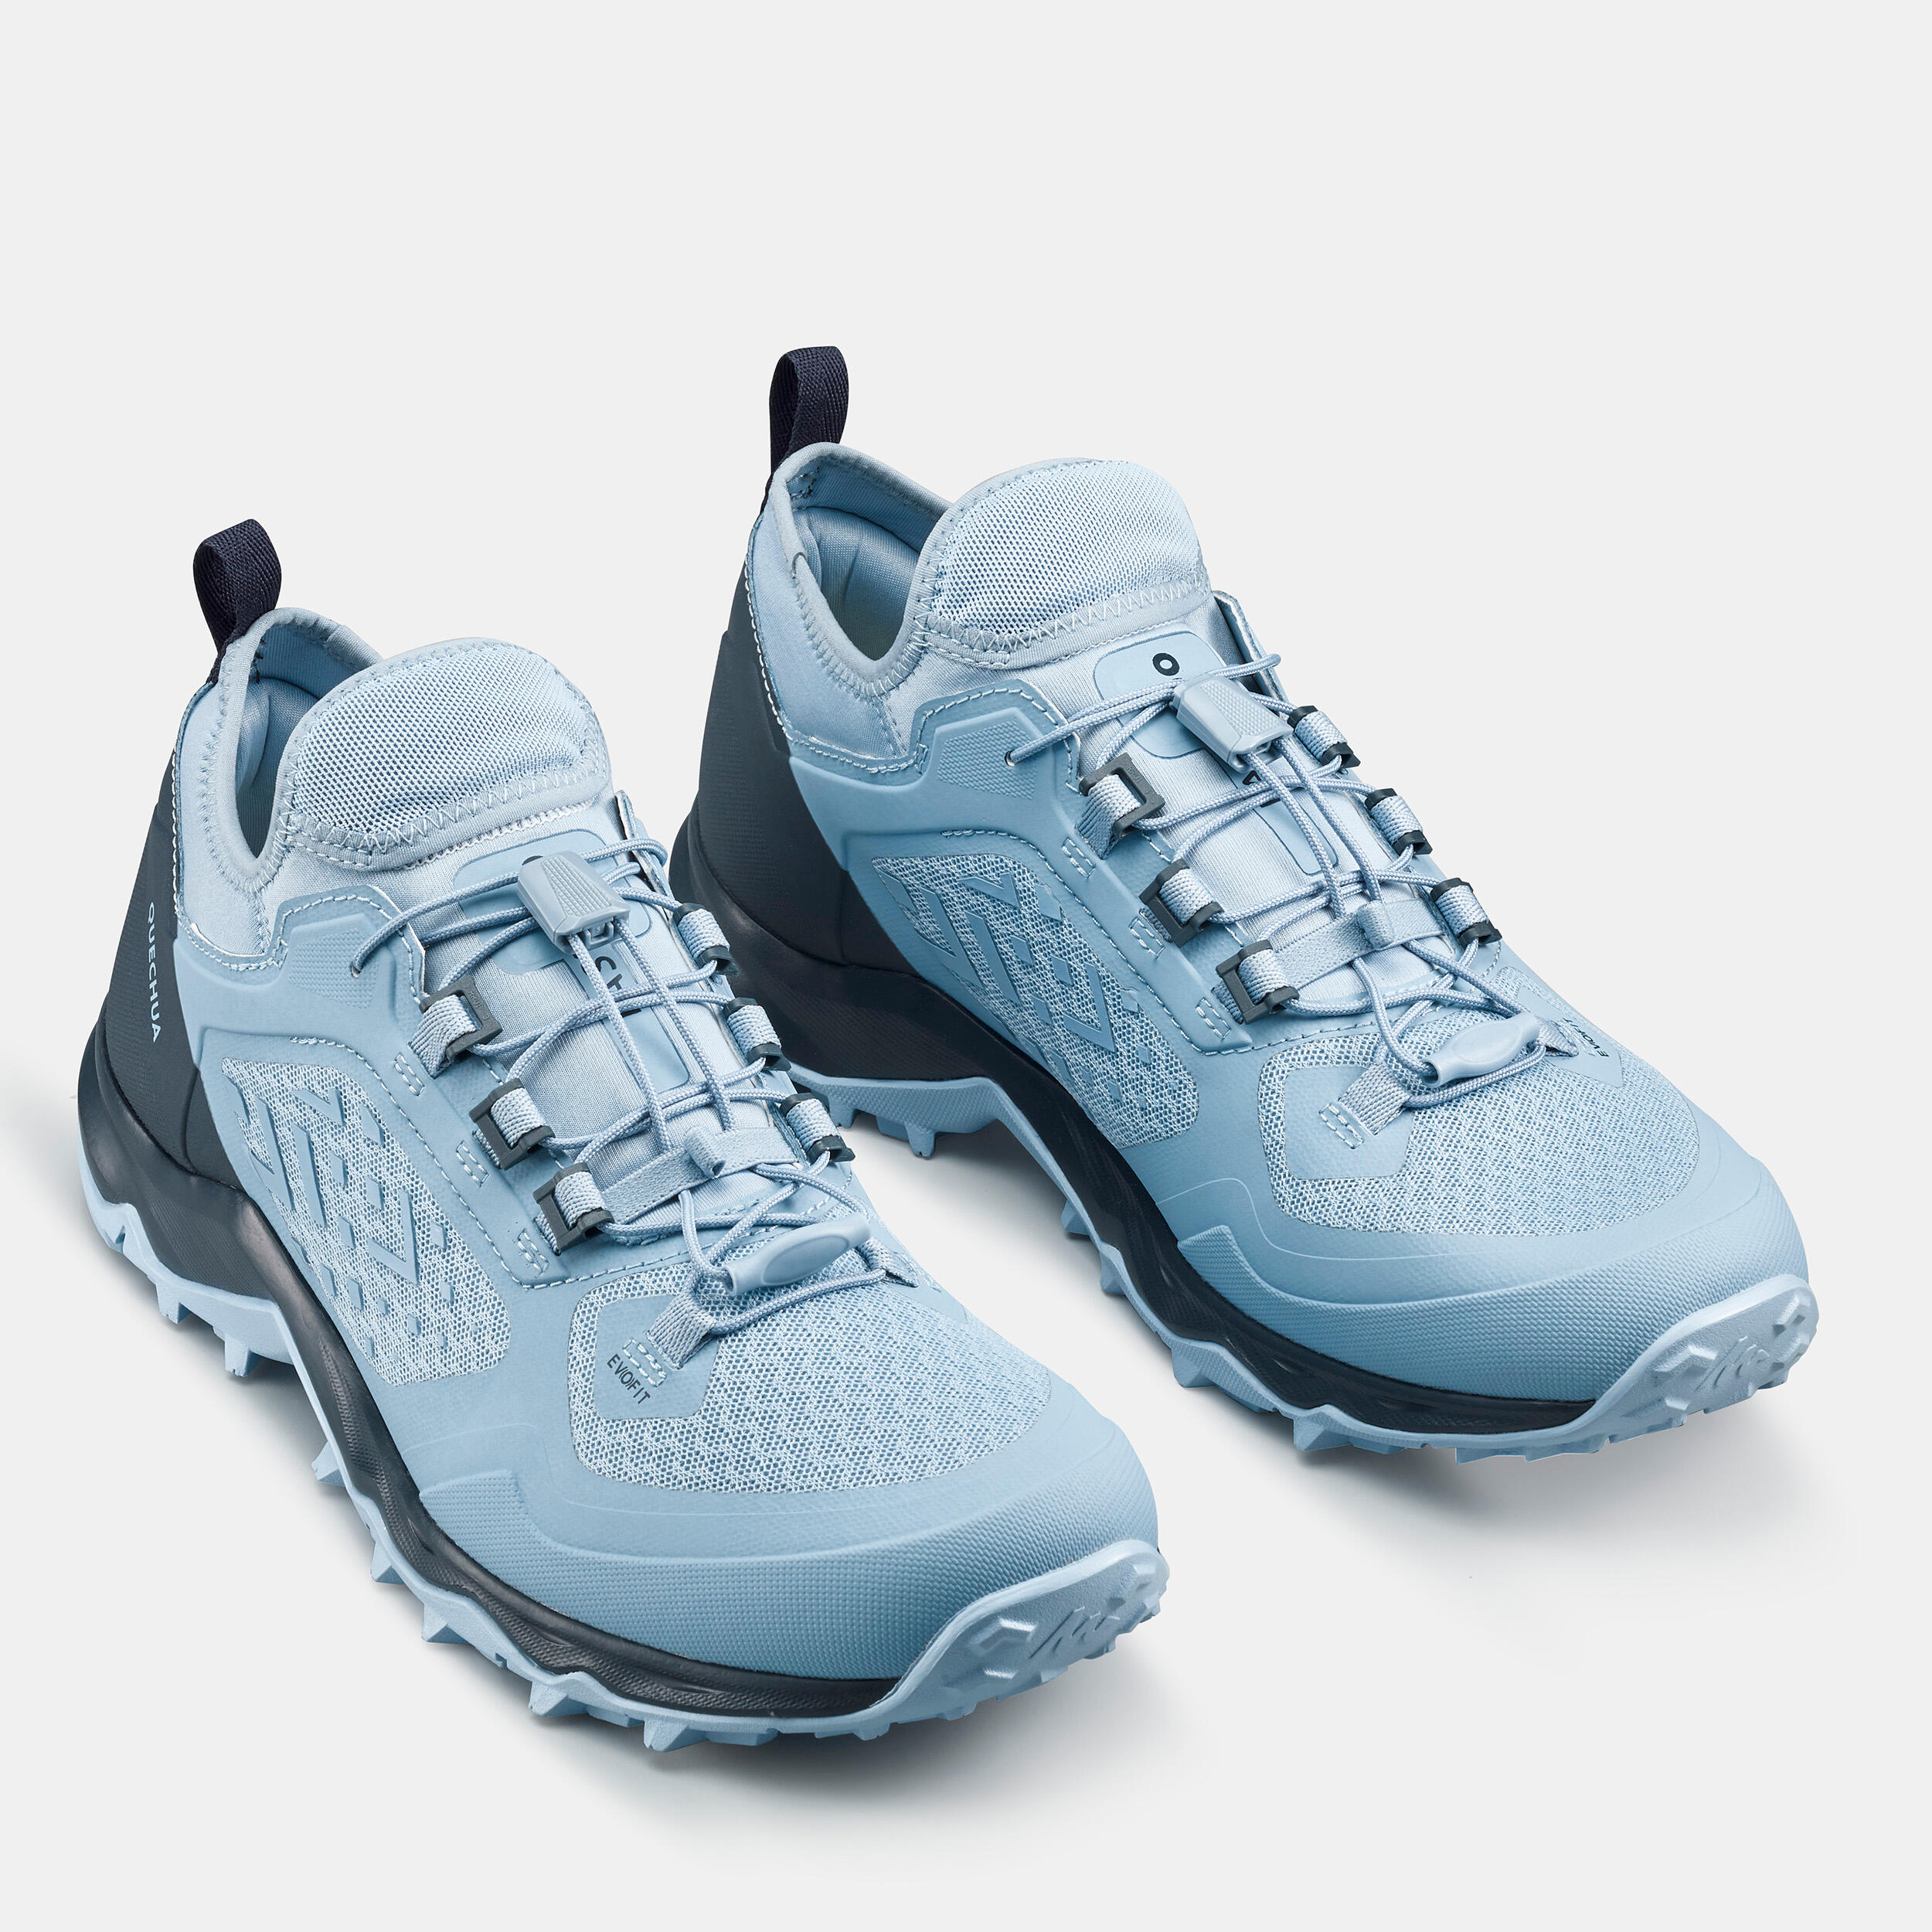 Men’s Fast Hiking Ultra Lightweight Boots - FH500 4/5